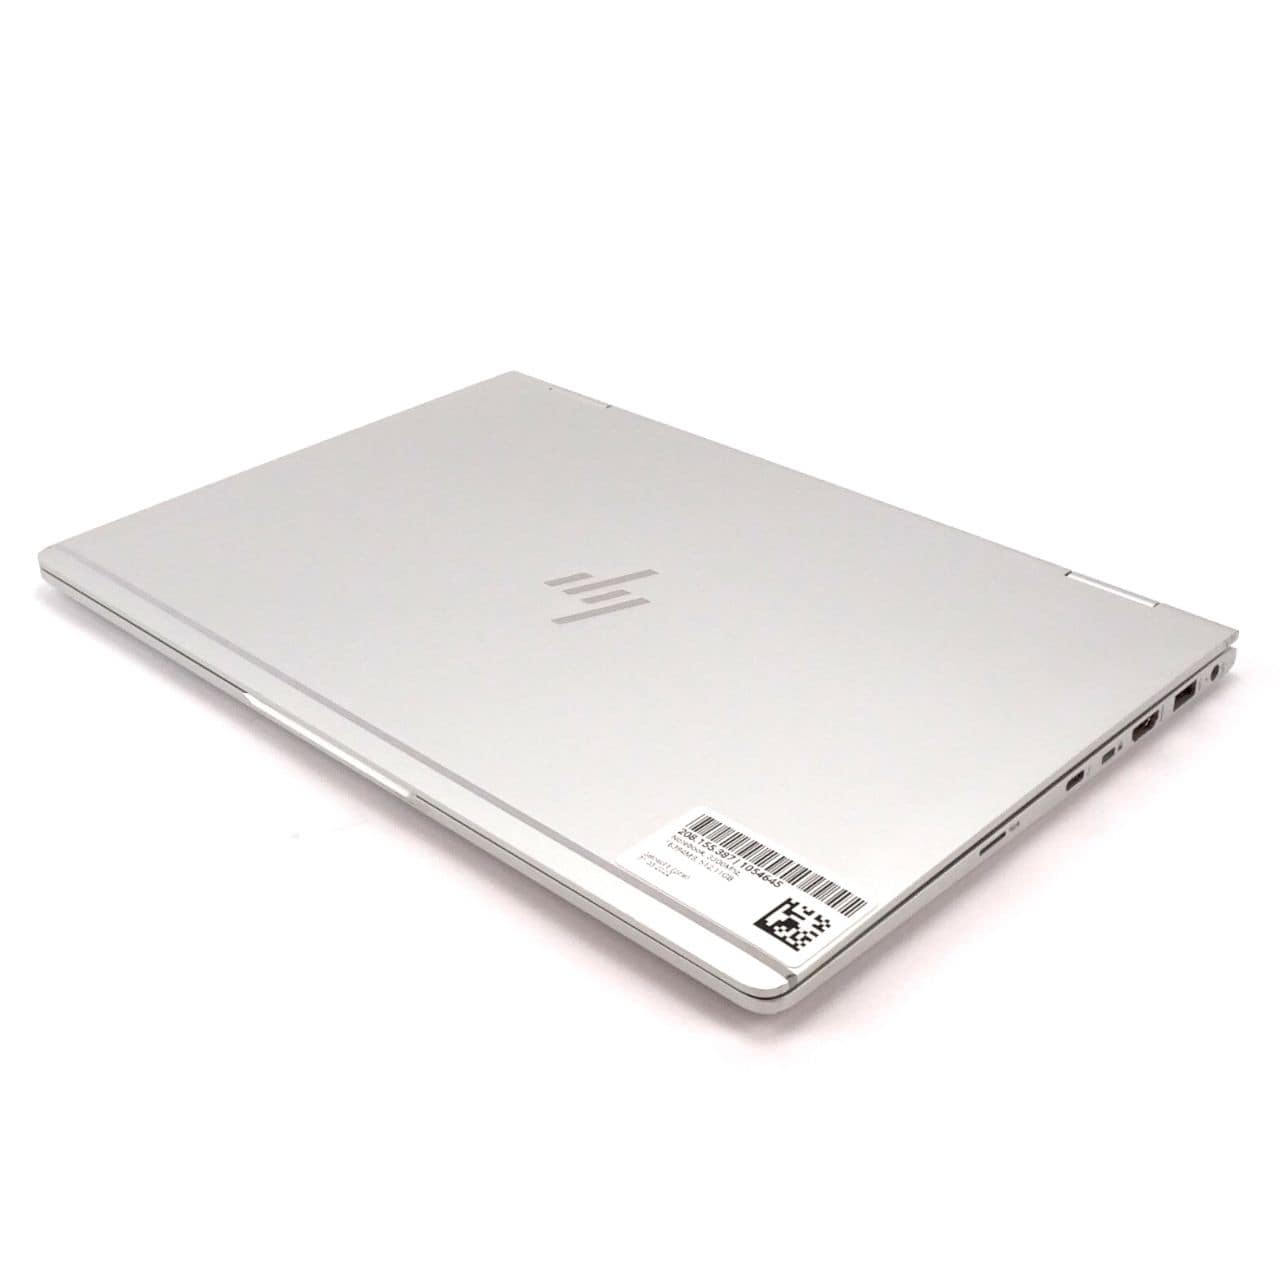 HP EliteBook x360 1030 G2 

 - 13,3 Zoll - Intel Core i5 7300U @ 2,6 GHz - 8 GB - 256 GB SSD - 1920 x 1080 FHD - Touchscreen - Windows 10 Professional - Sehr gut